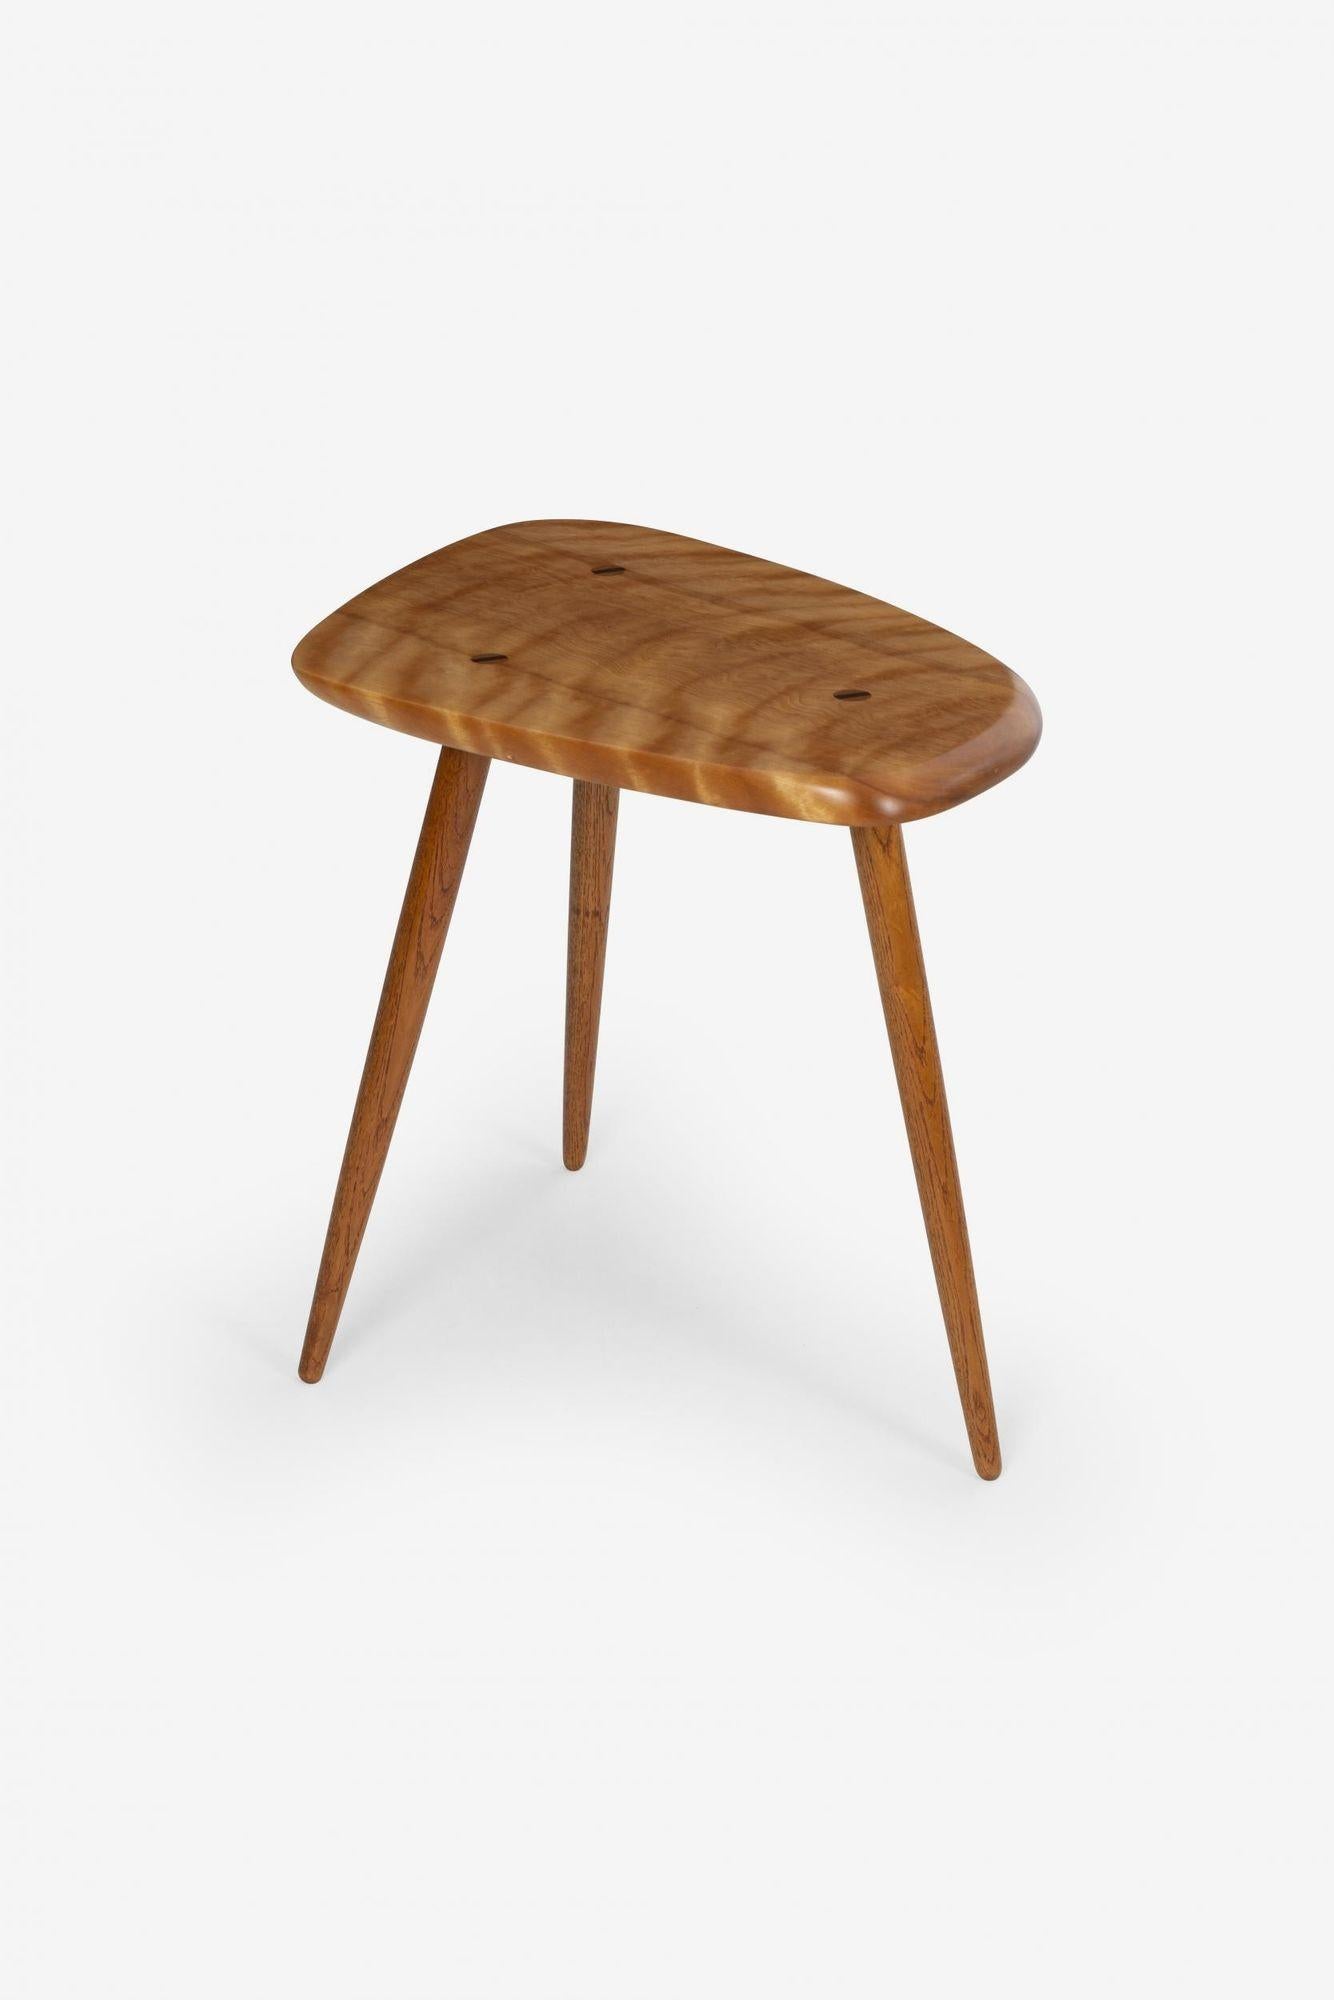 Hand-Crafted Arthur Espenet Carpenter Three-Legged Occasional Table For Sale